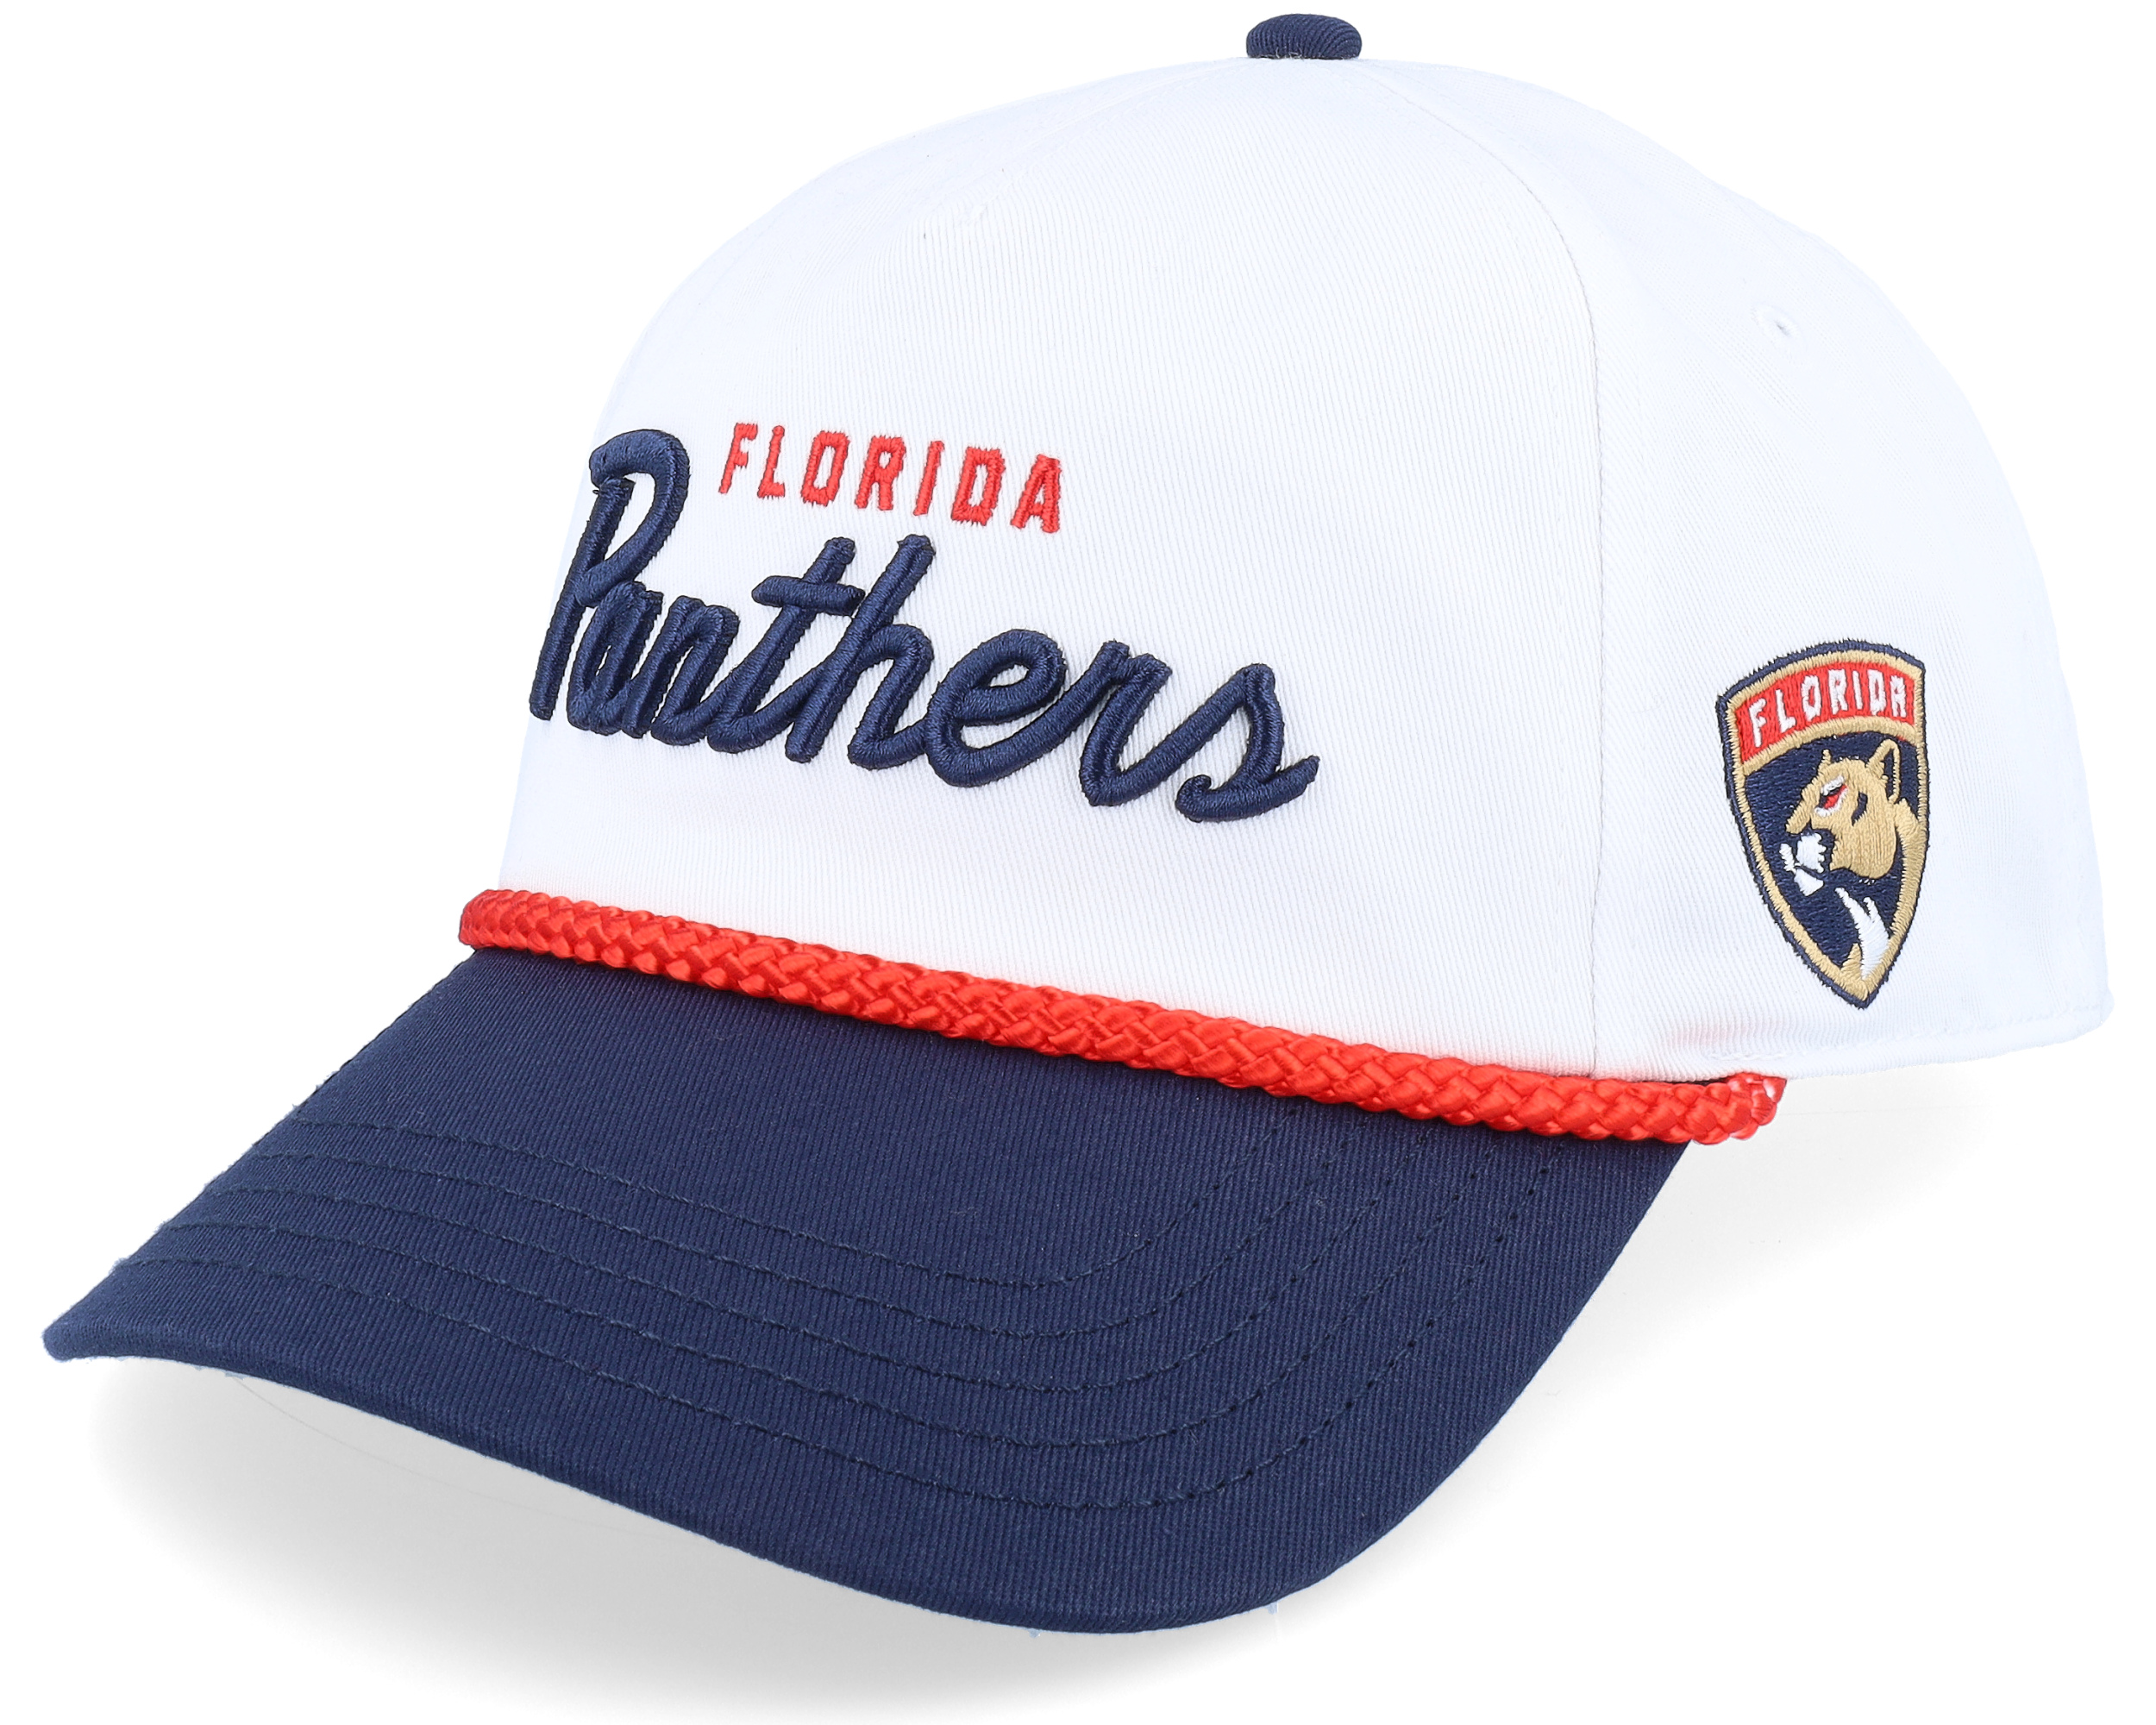 AMERICAN NEEDLE Roscoe Florida Panthers Mens Snapback Hat